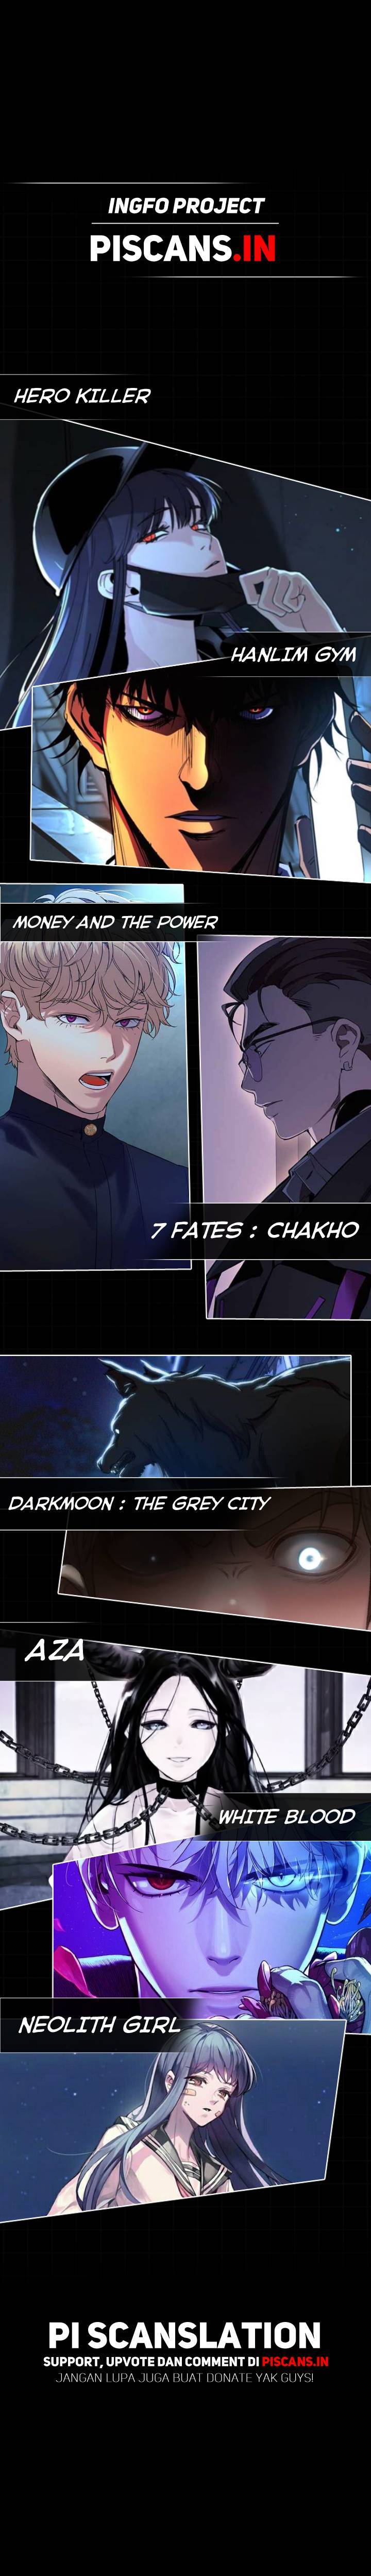 7fates Chakho Chapter 50